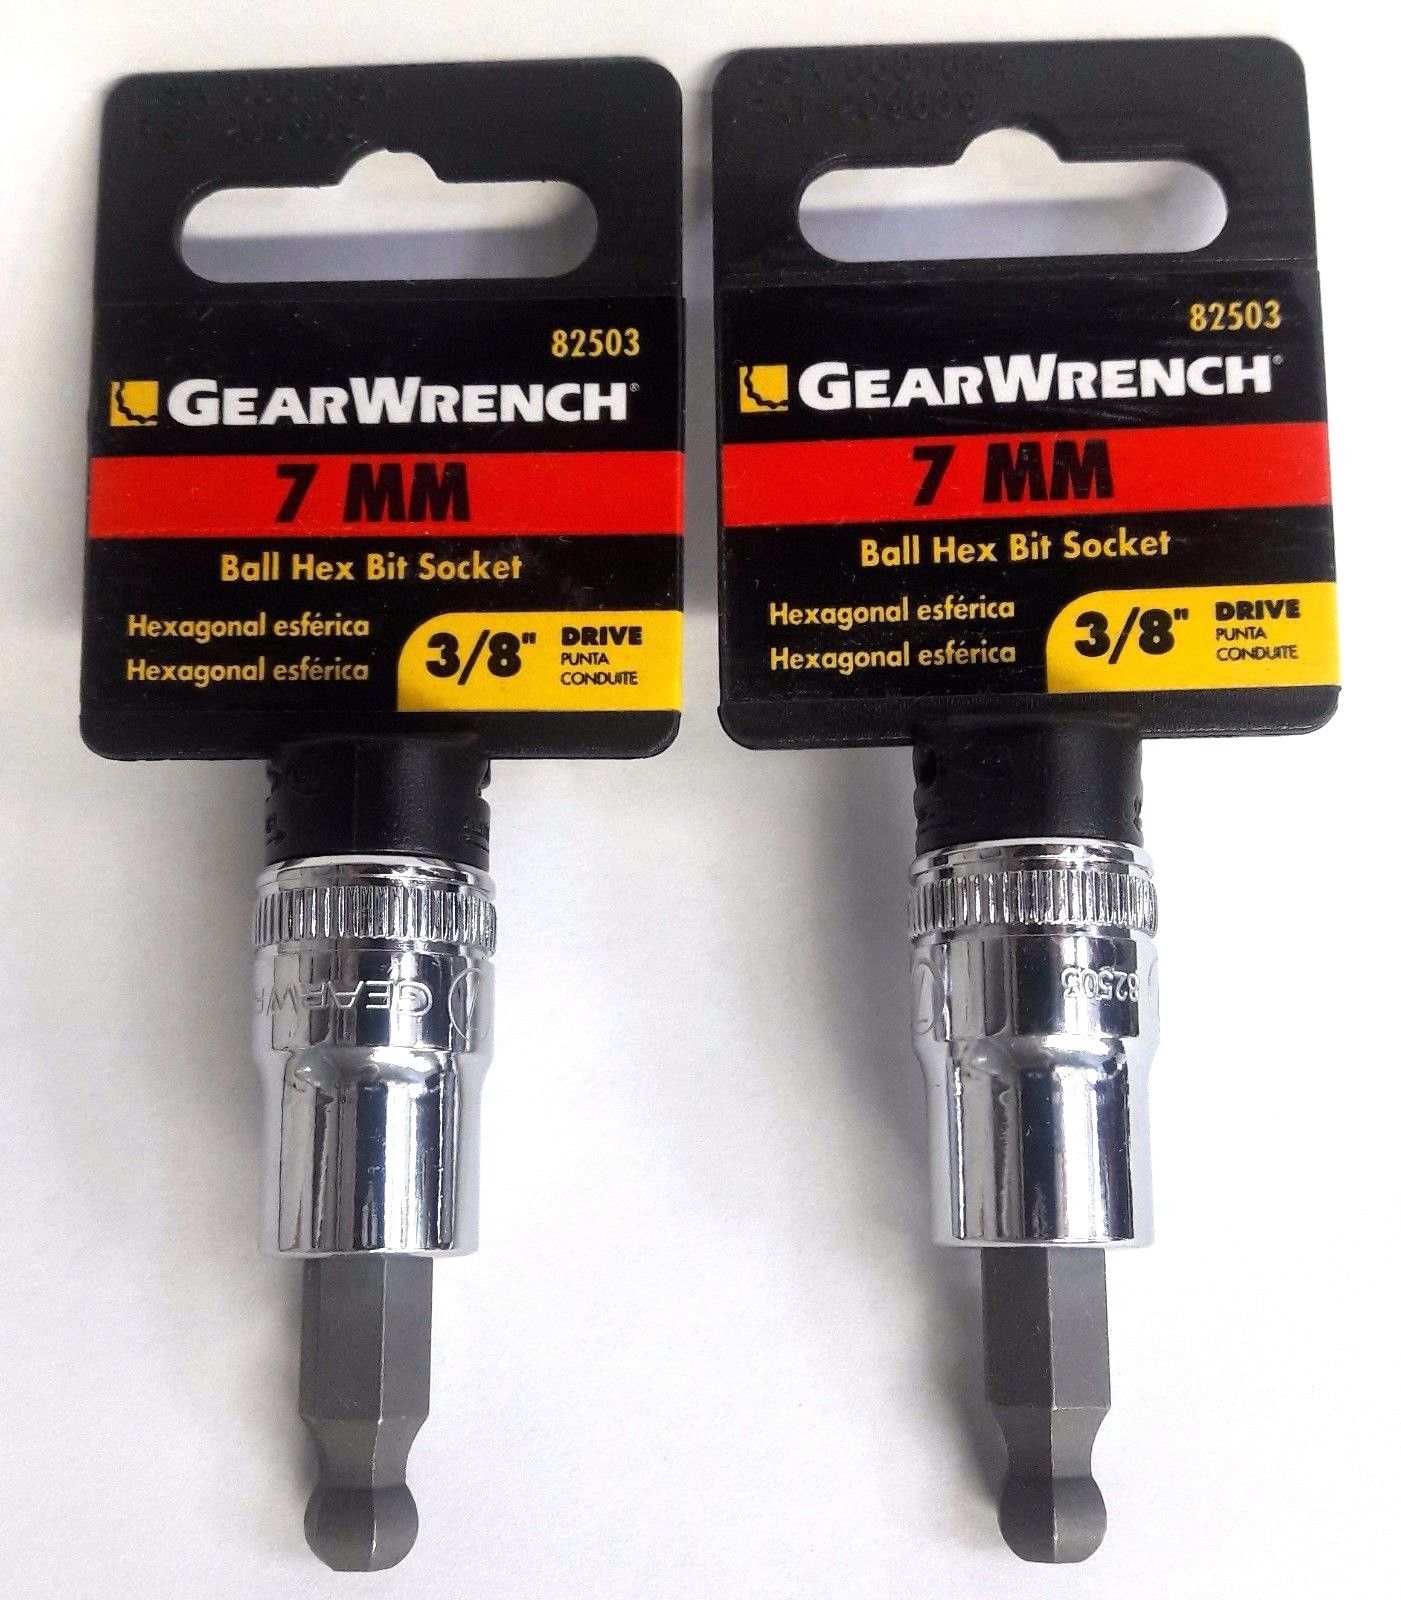 Gearwrench 7mm Ball Hex Bit Socket 3/8" Drive 82503 2PCS